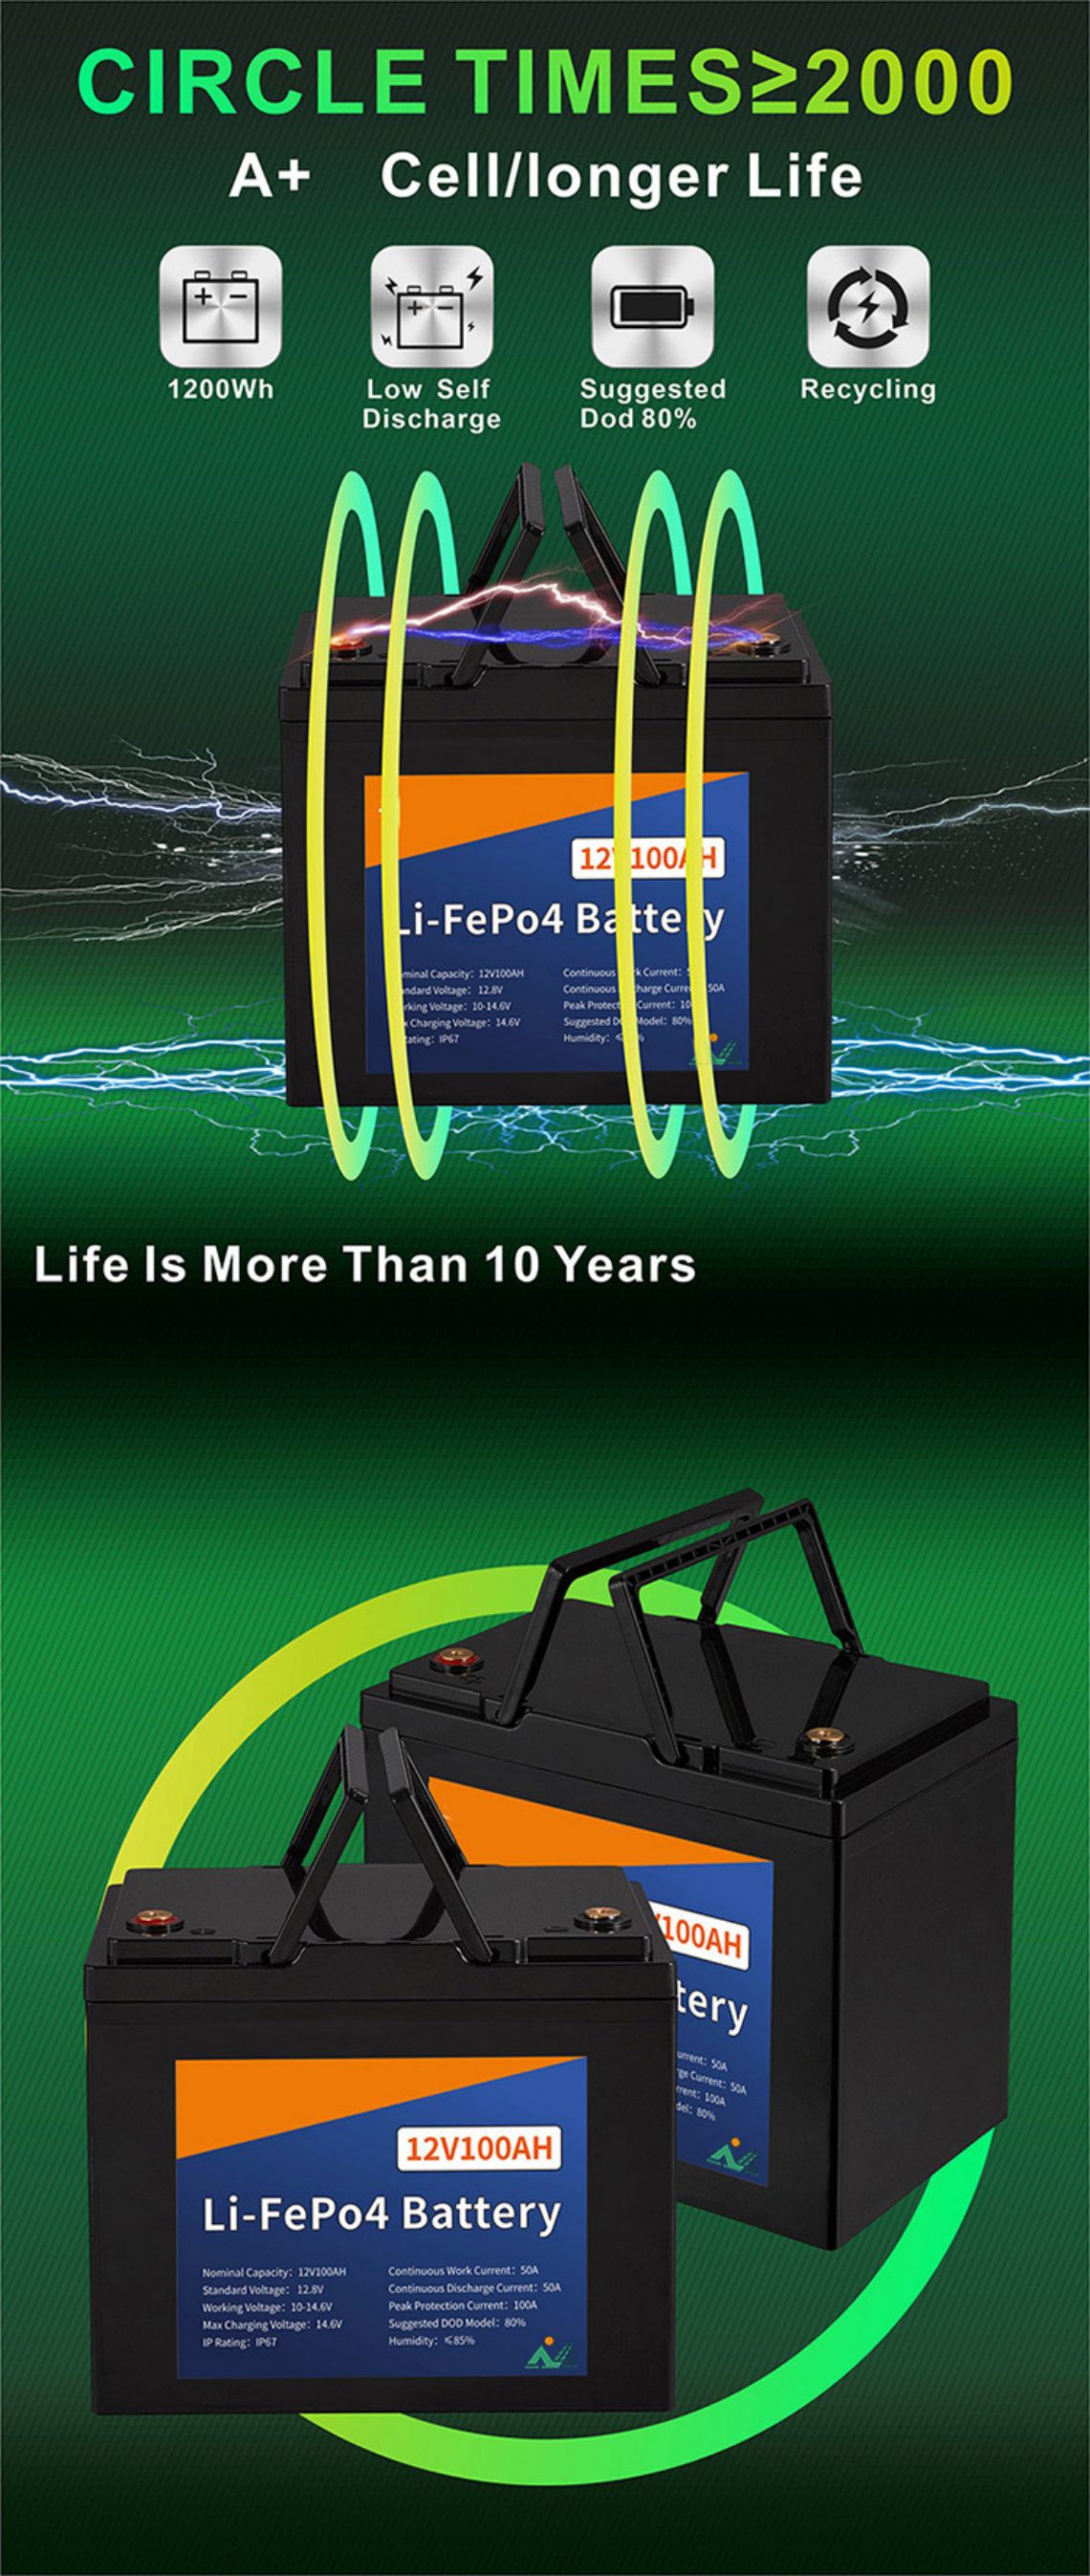 lifopo4 lithium battery